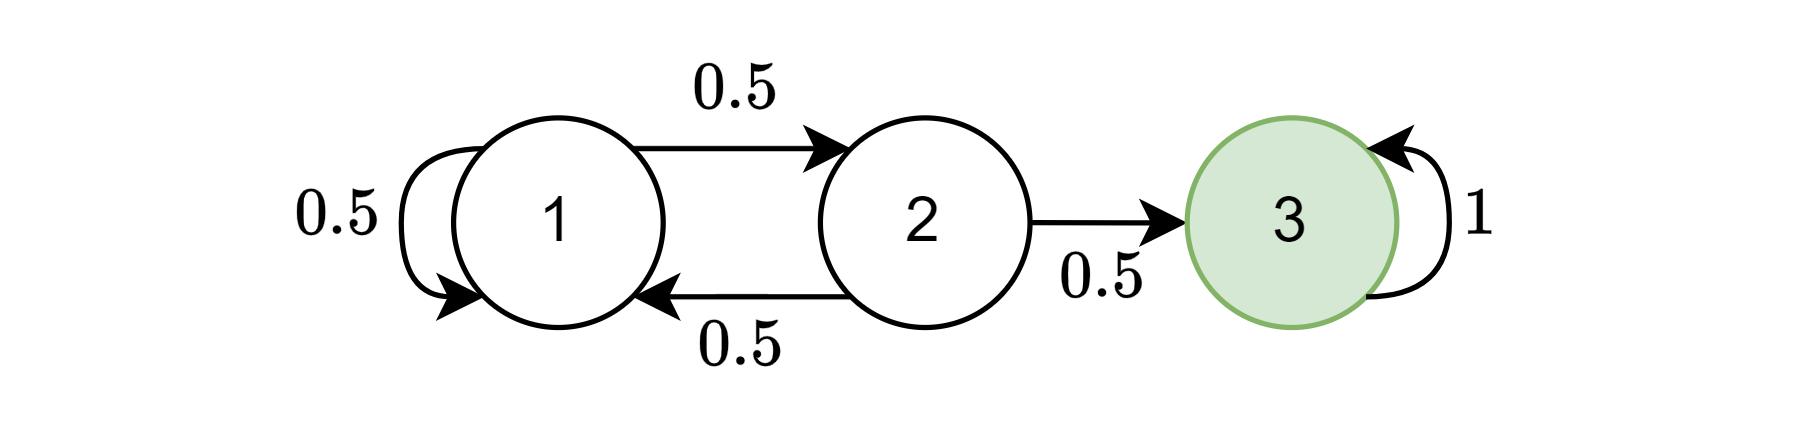 Diagram showing a simple Markov chain